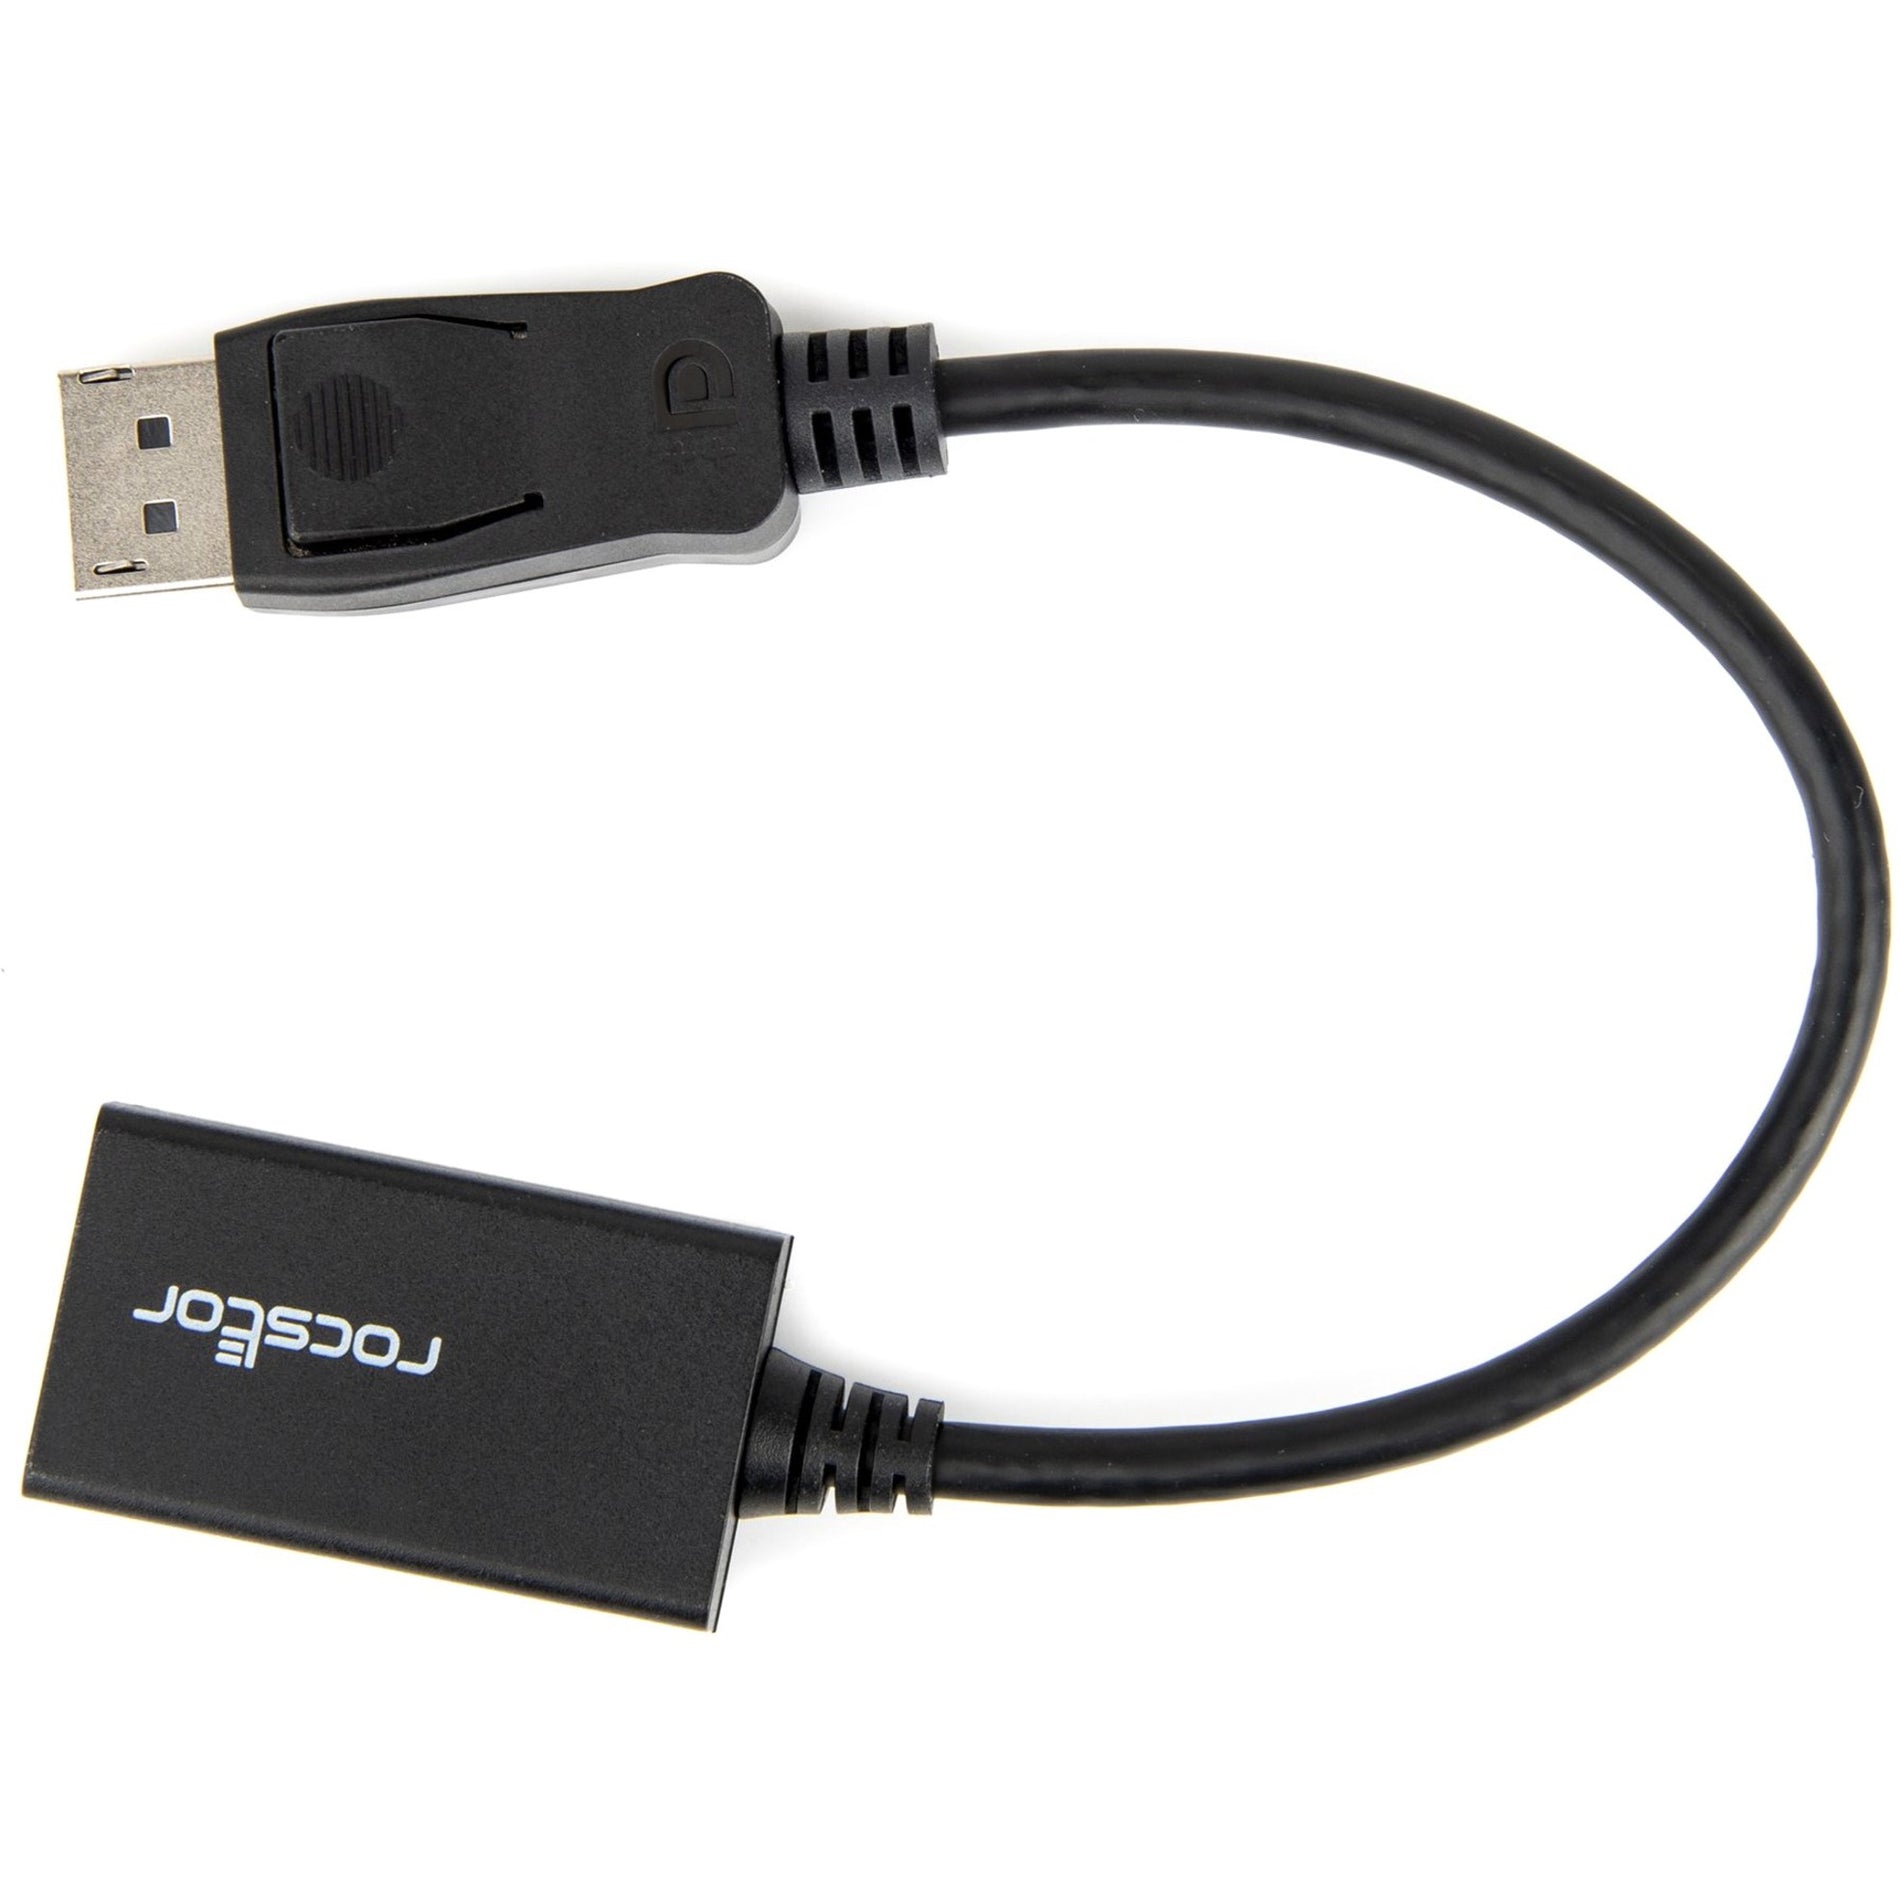 Rocstor Y10A101-B1 DisplayPort (maschio) a HDMI (femmina) Adattatore Convertitore Risoluzione 1920 x 1200 Supportata